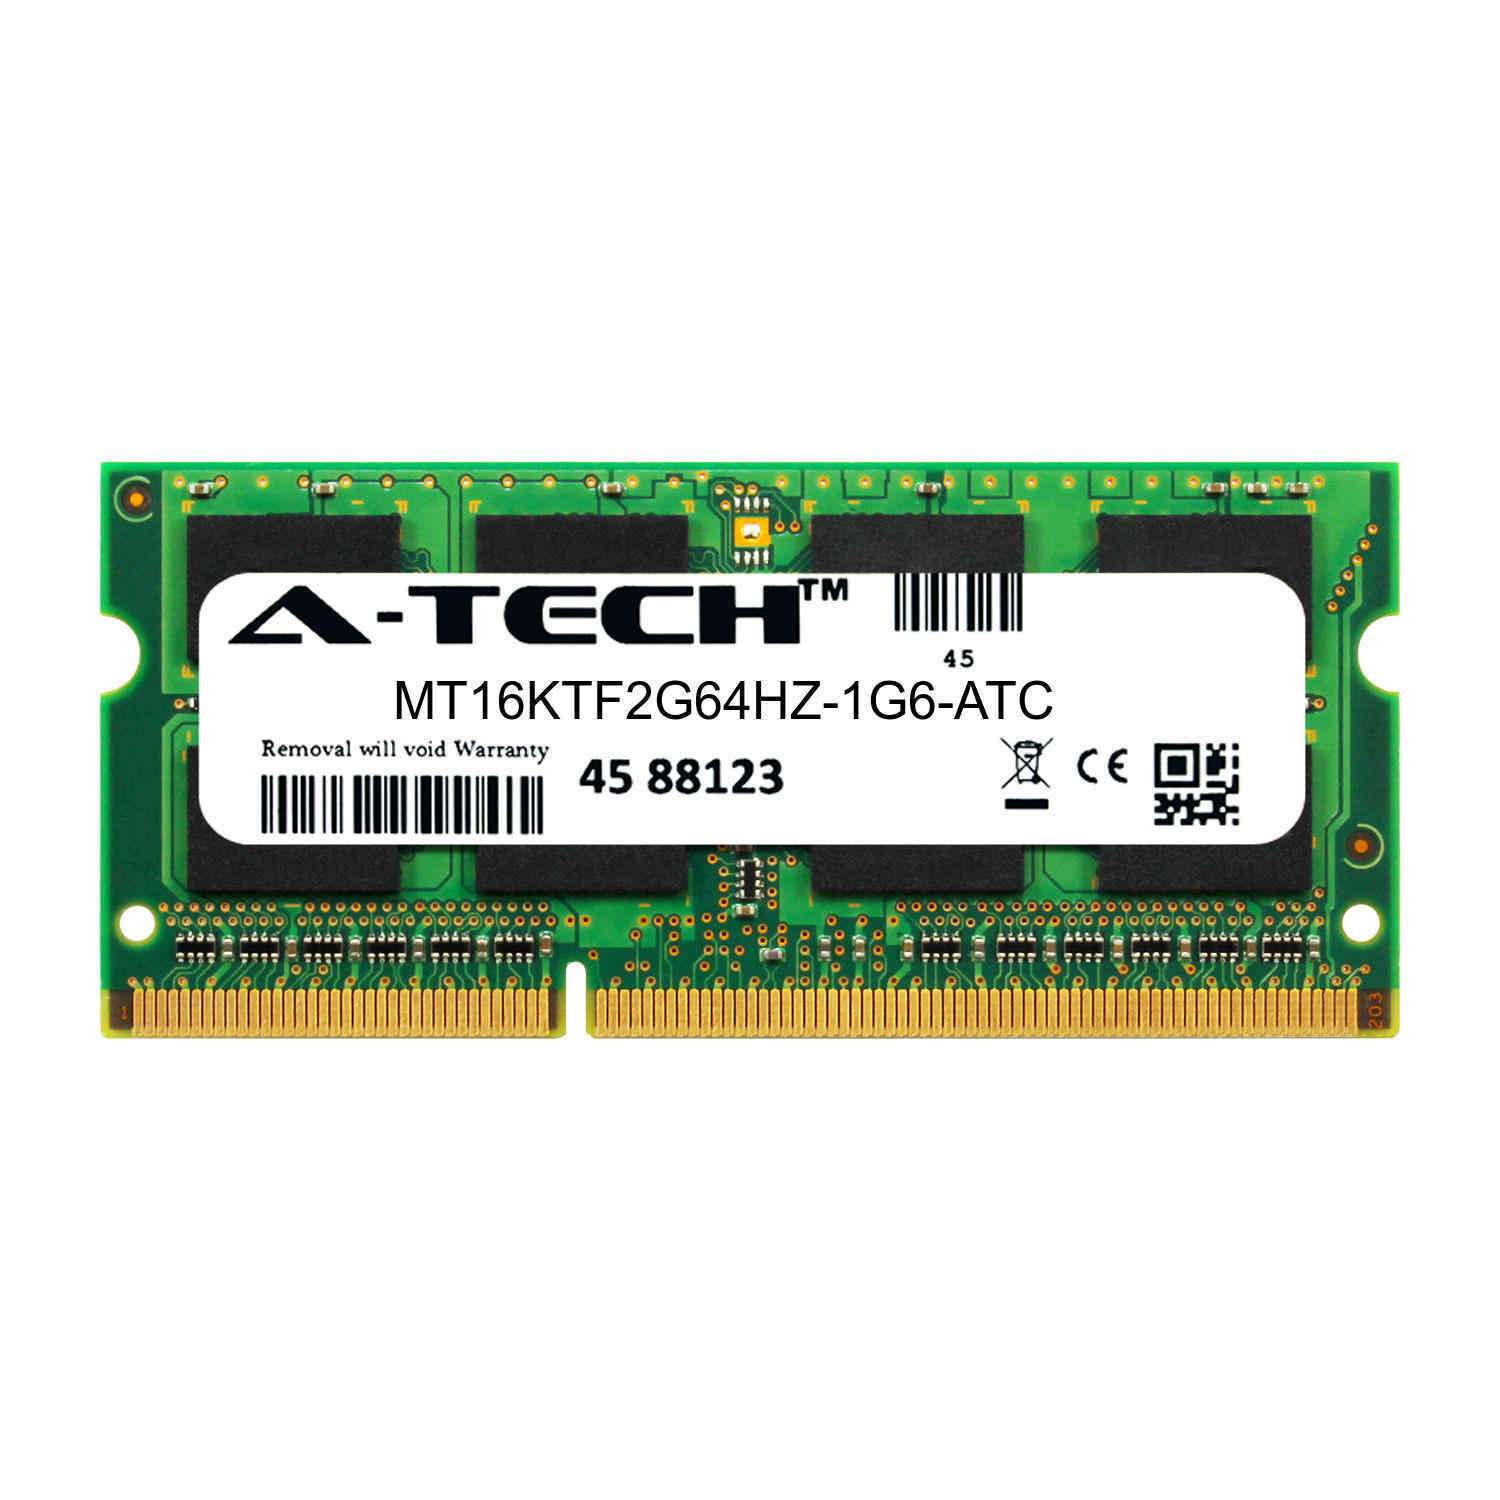 16GB DDR3 PC3-12800 SODIMM (Micron MT16KTF2G64HZ-1G6 Equivalent) Memory RAM